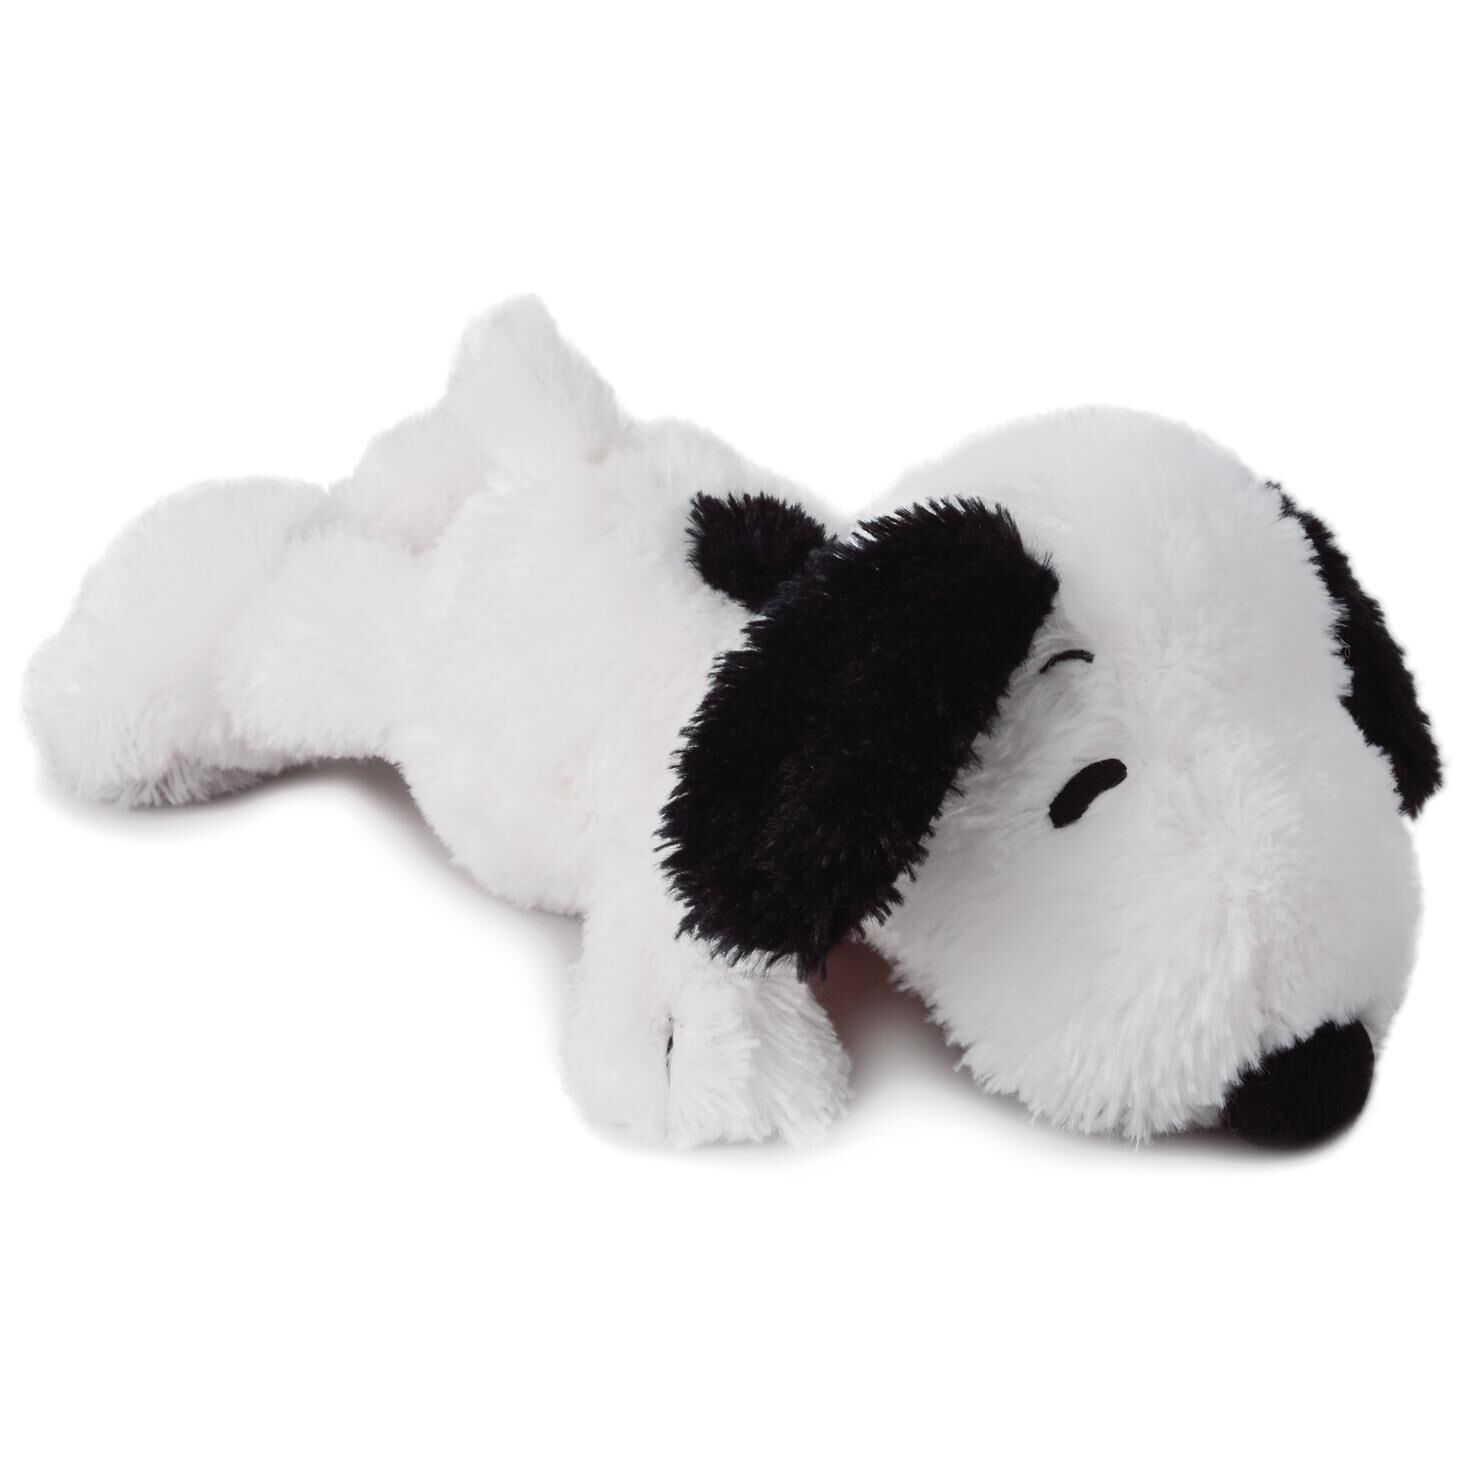 where can i buy a snoopy stuffed animal